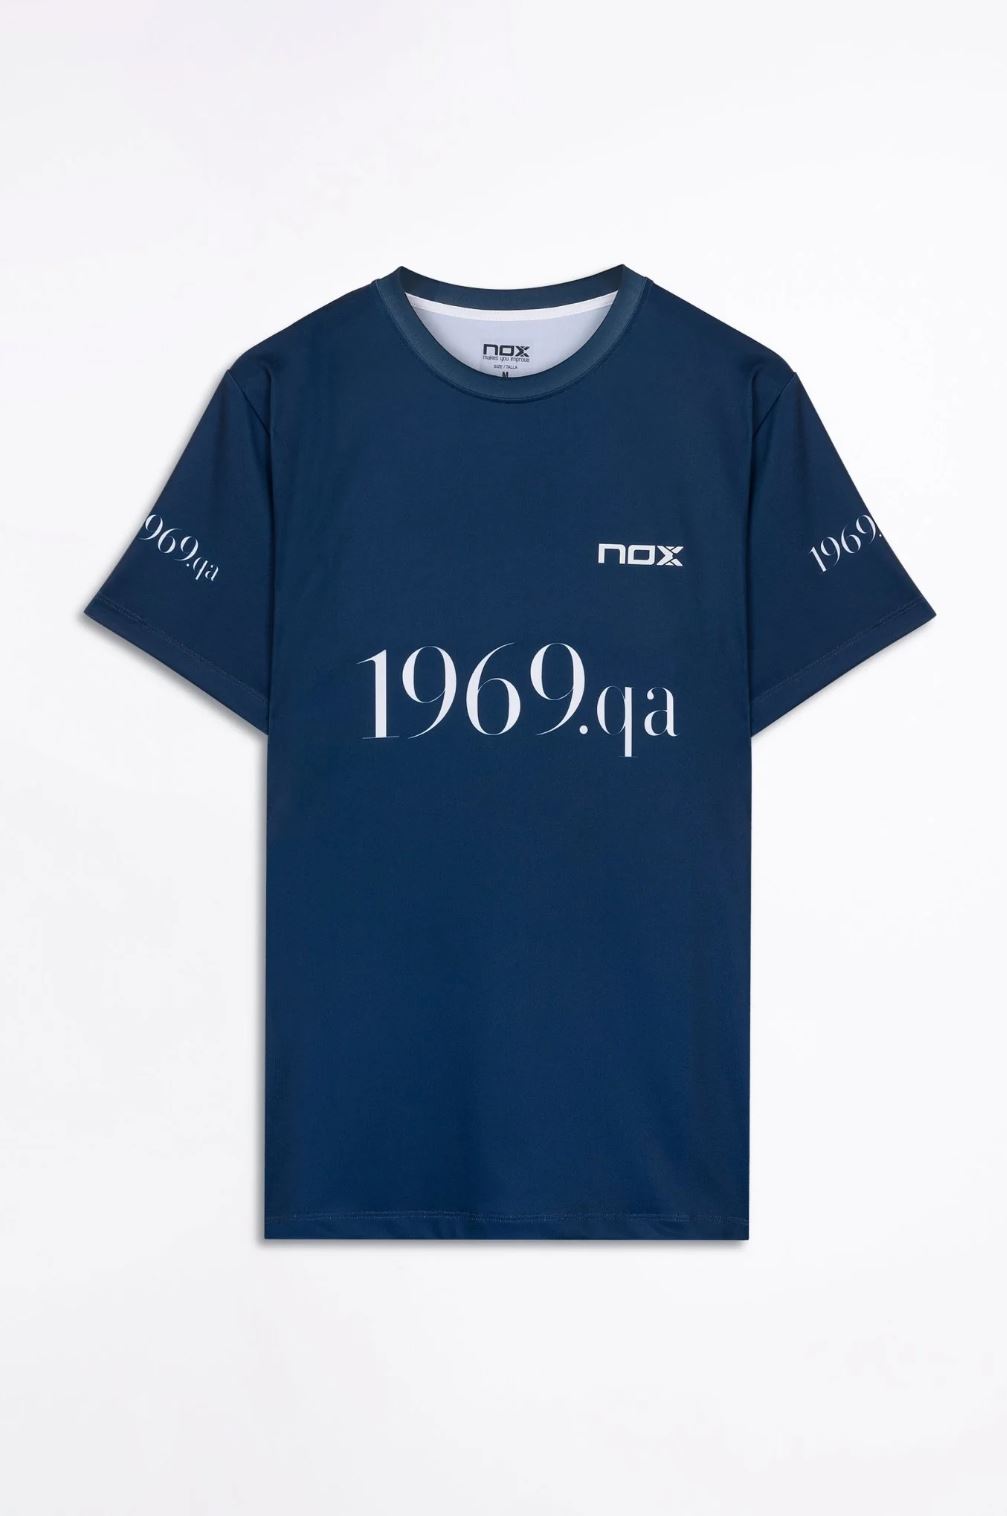 Nox Agustin Tapia Official Padel T-Shirt 2022/23 (Navy Blue)